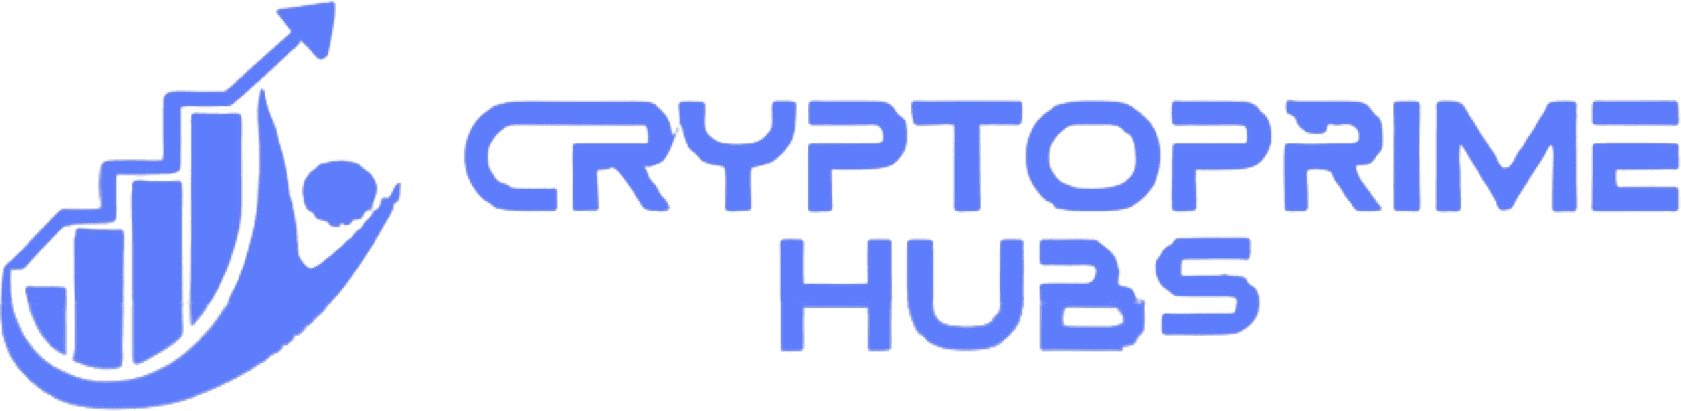 Cryptoprimehubs